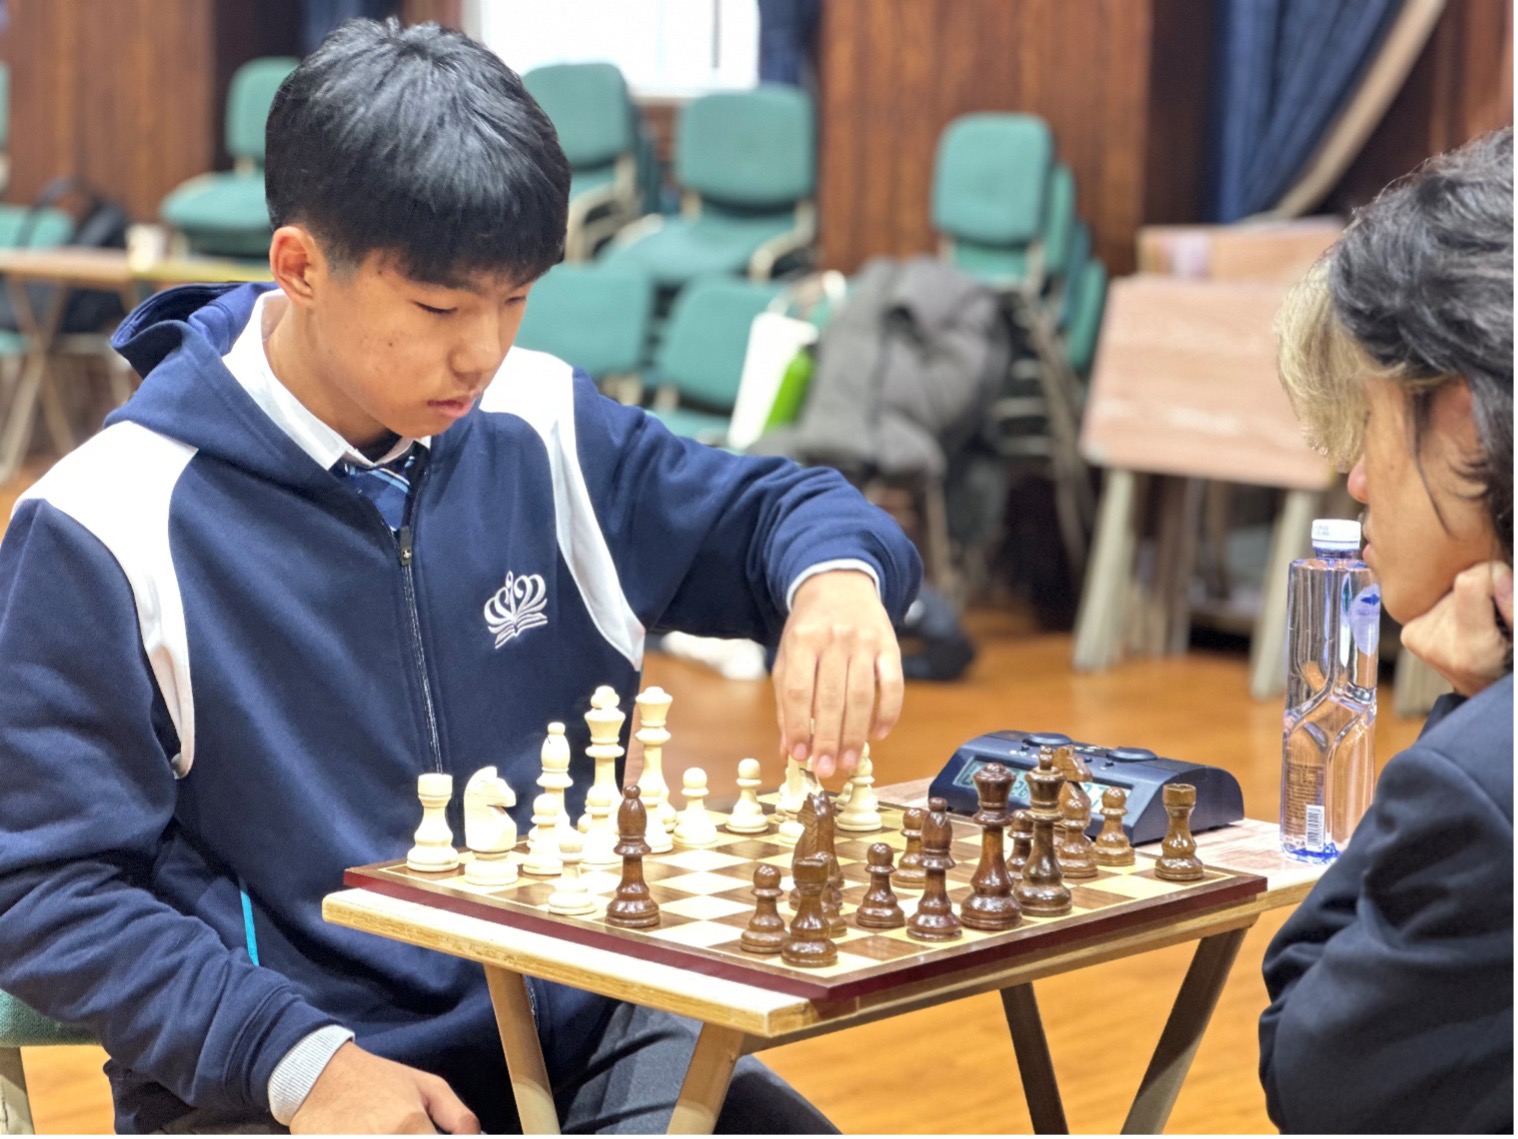 Chess Club Dominates CISA Chess Tournament - Chess Club Dominates CISA Chess Tournament